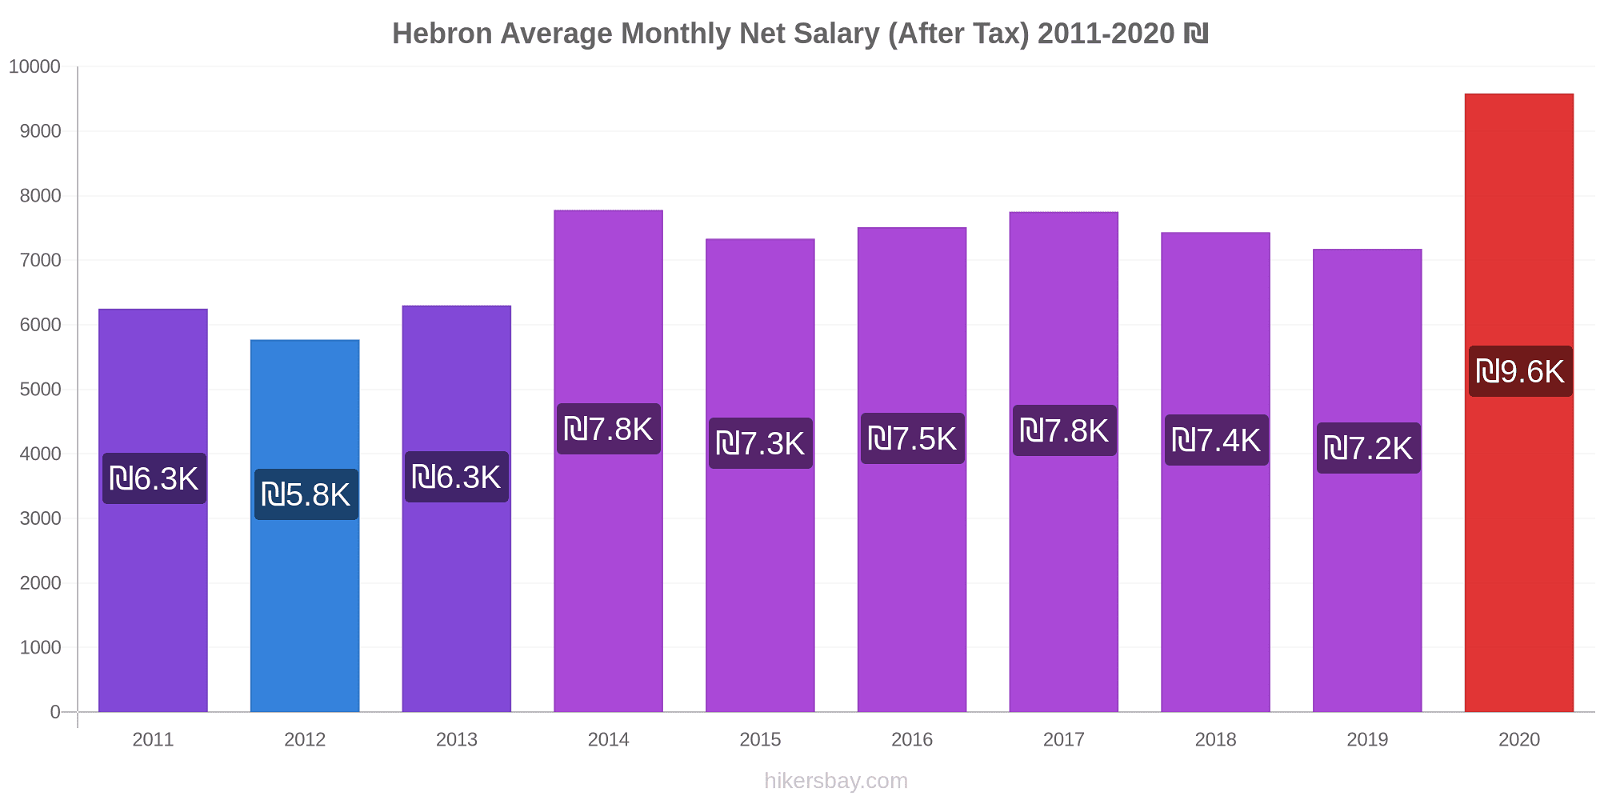 Hebron price changes Average Monthly Net Salary (After Tax) hikersbay.com